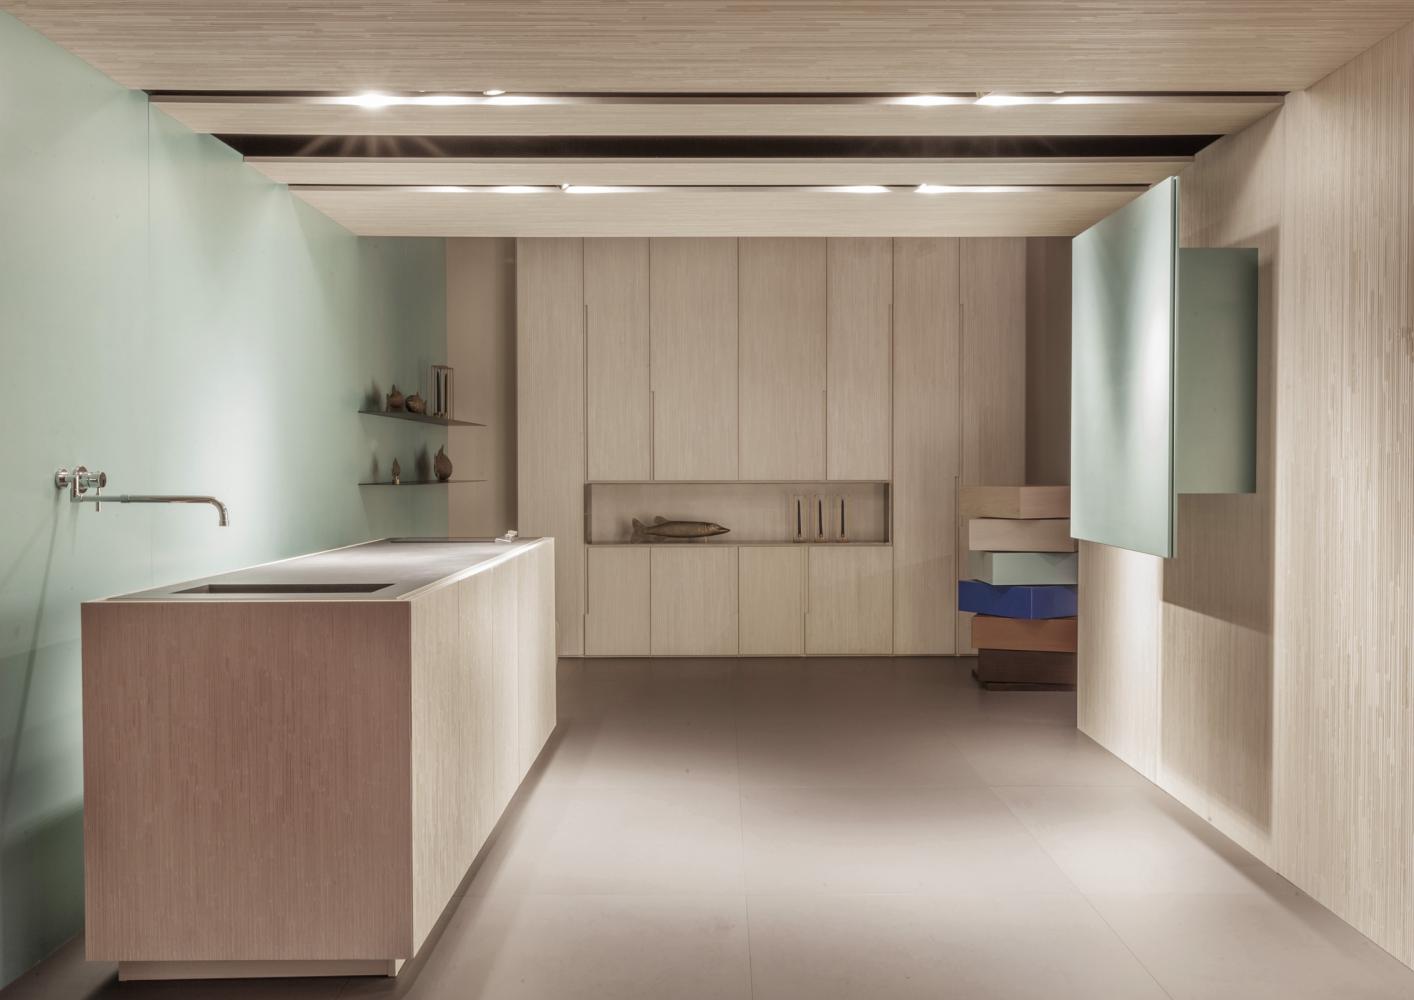 Bespoke luxury modern kitchen in white carved wood